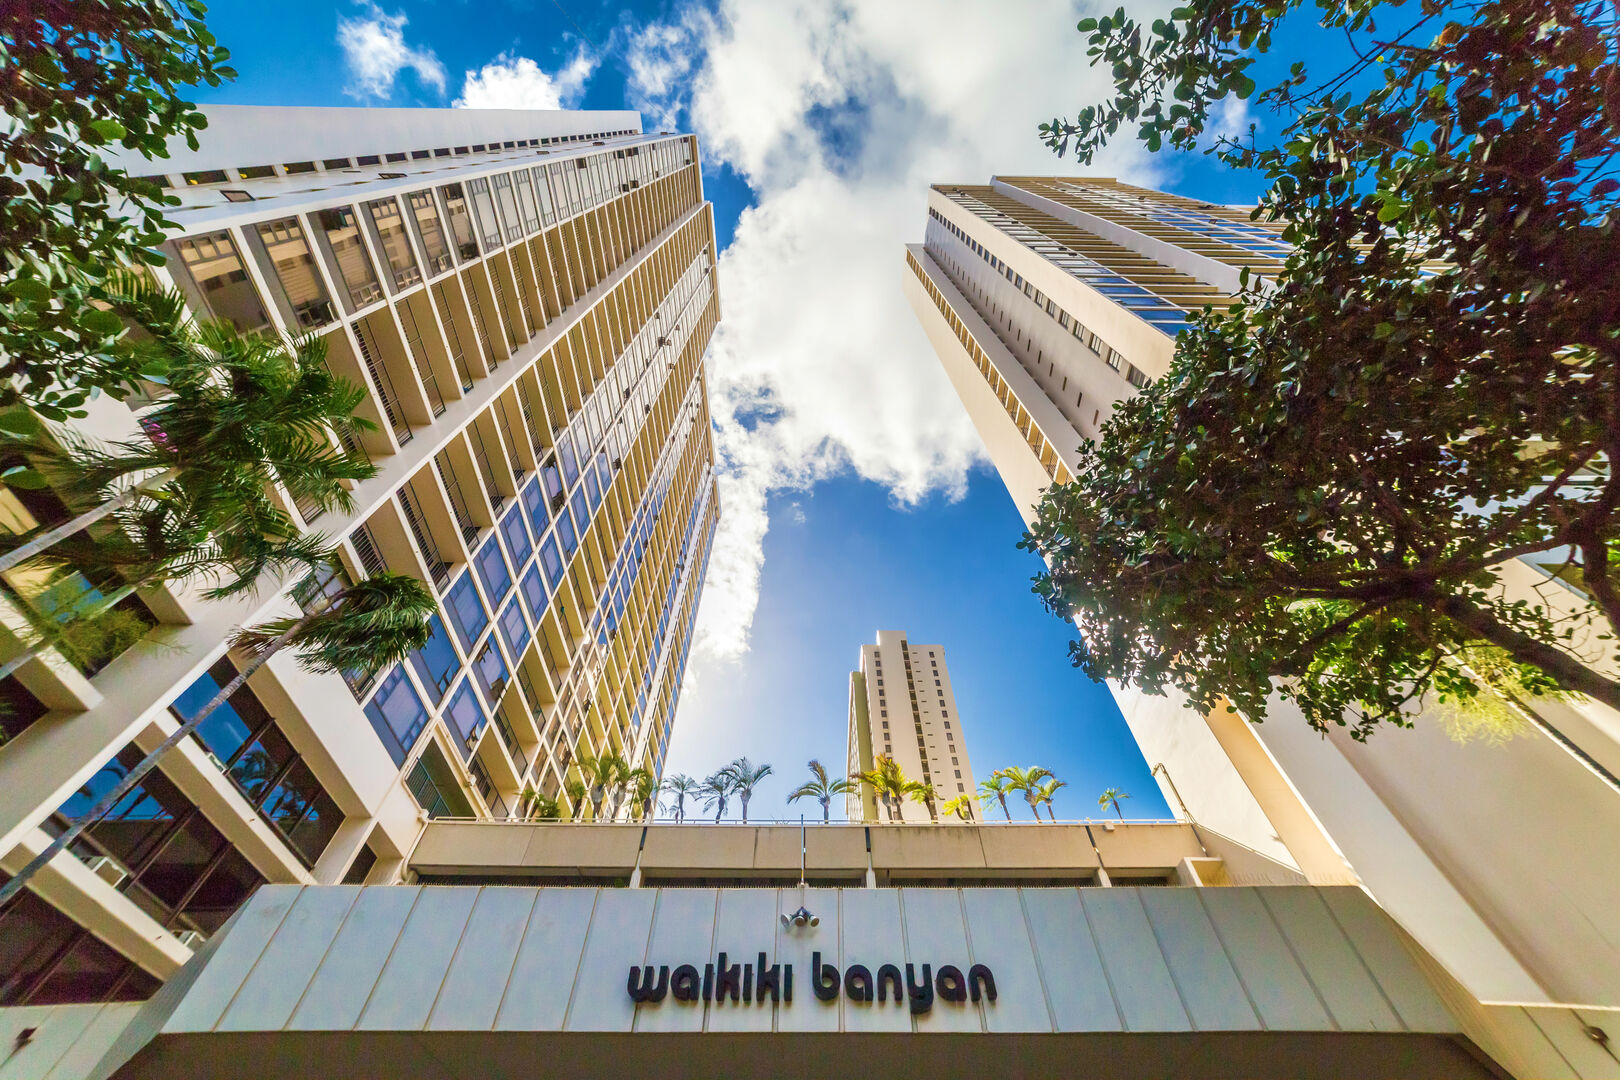 Waikiki Banyan and its two towers!